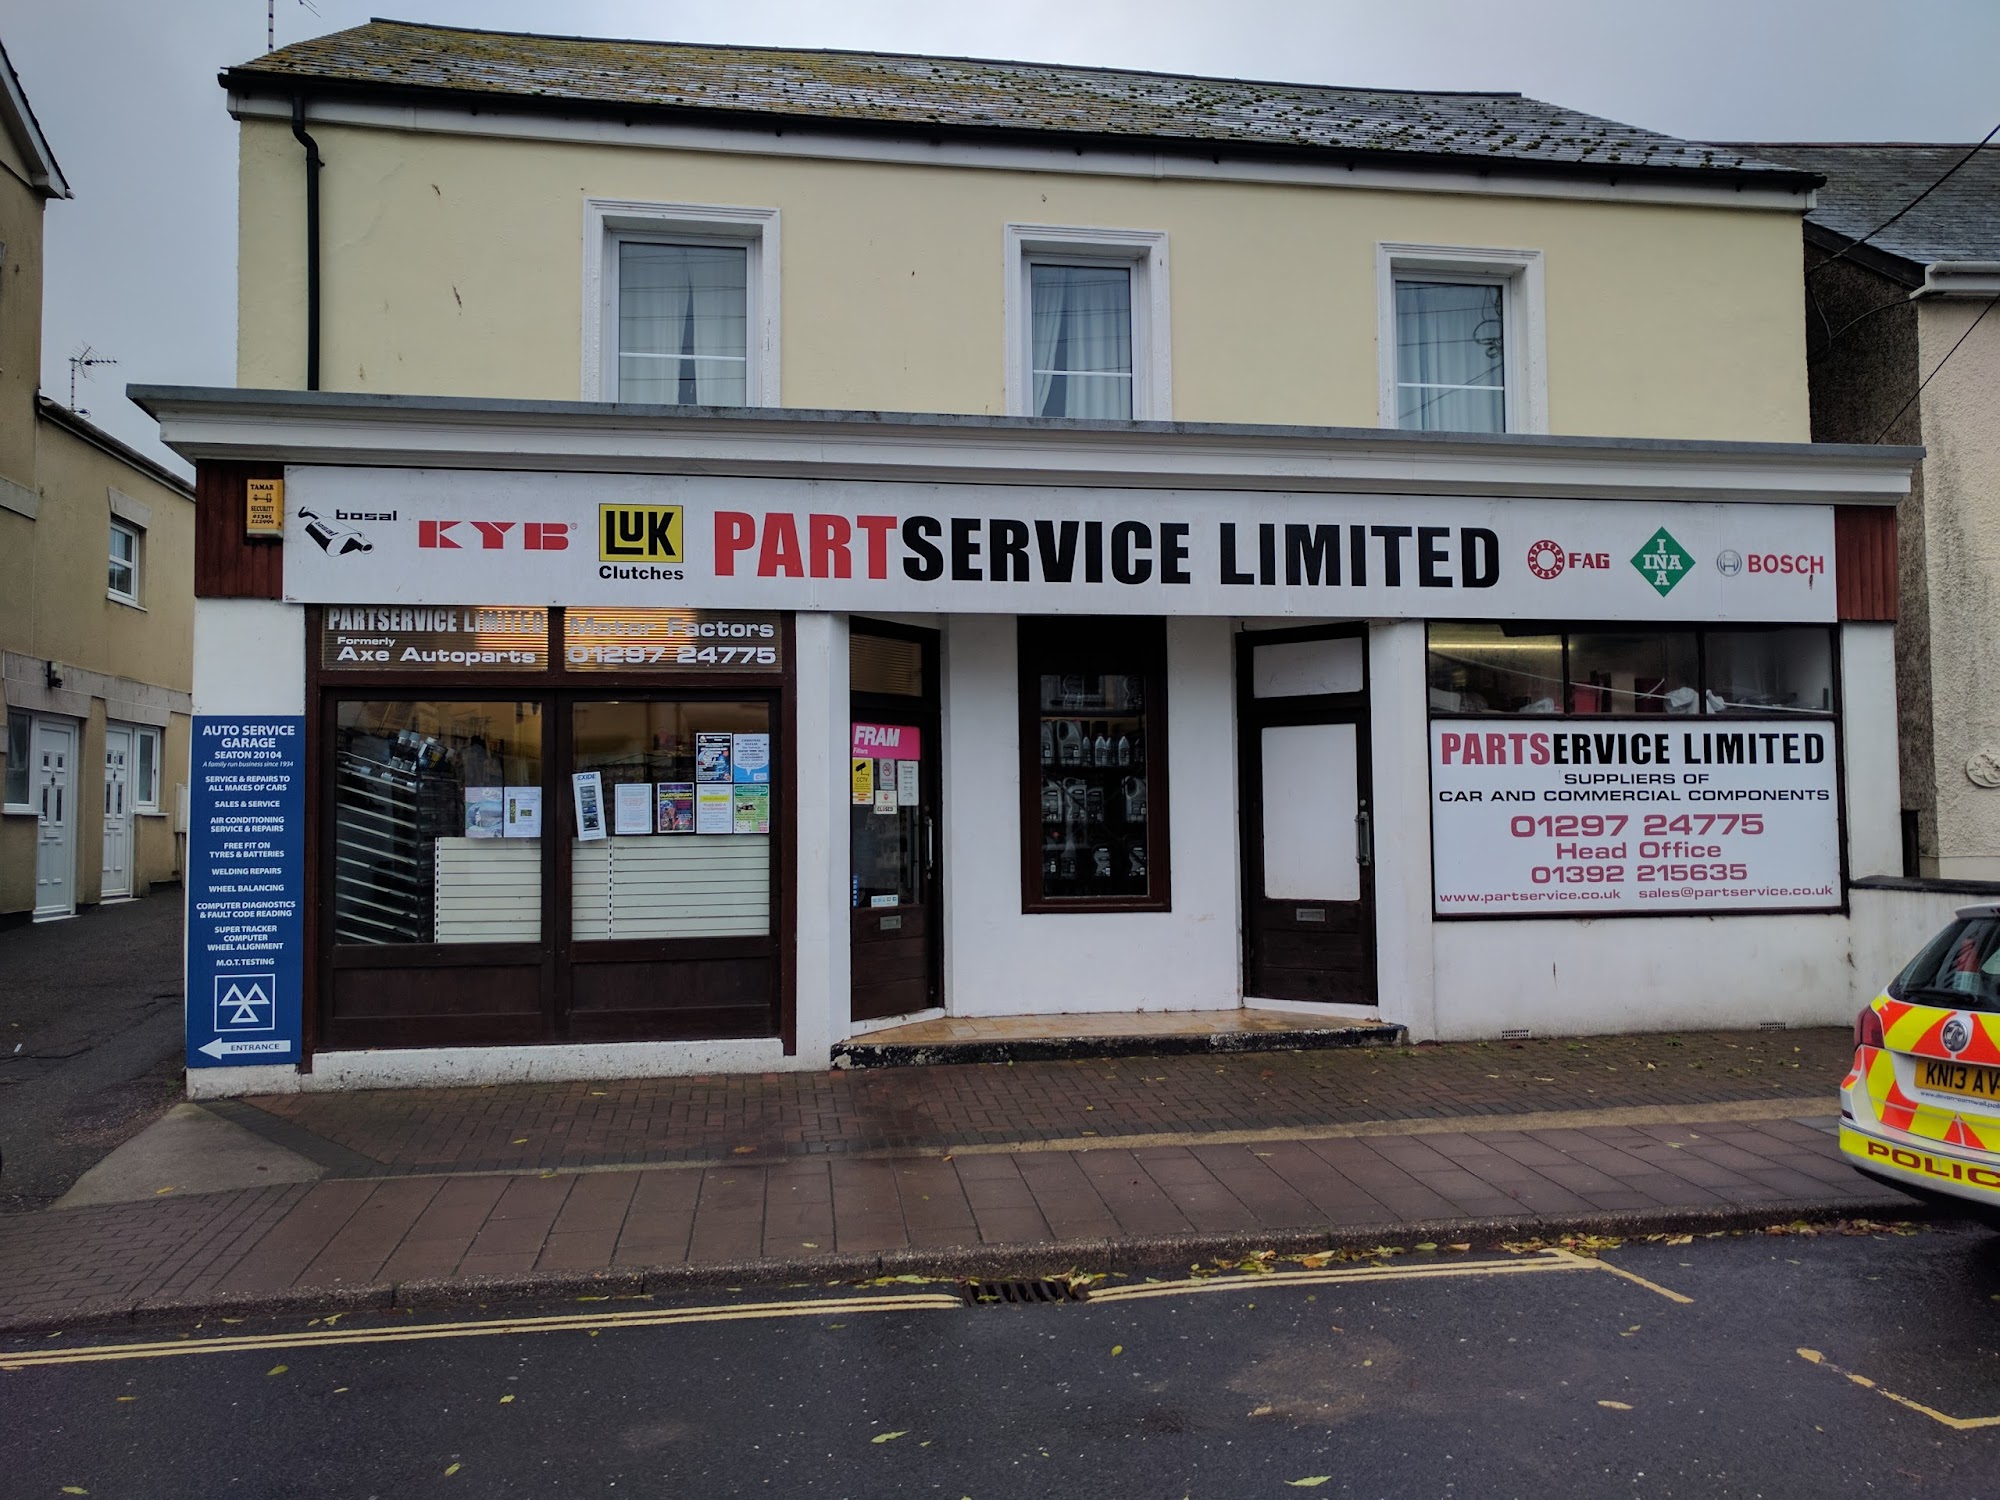 Partservice Ltd